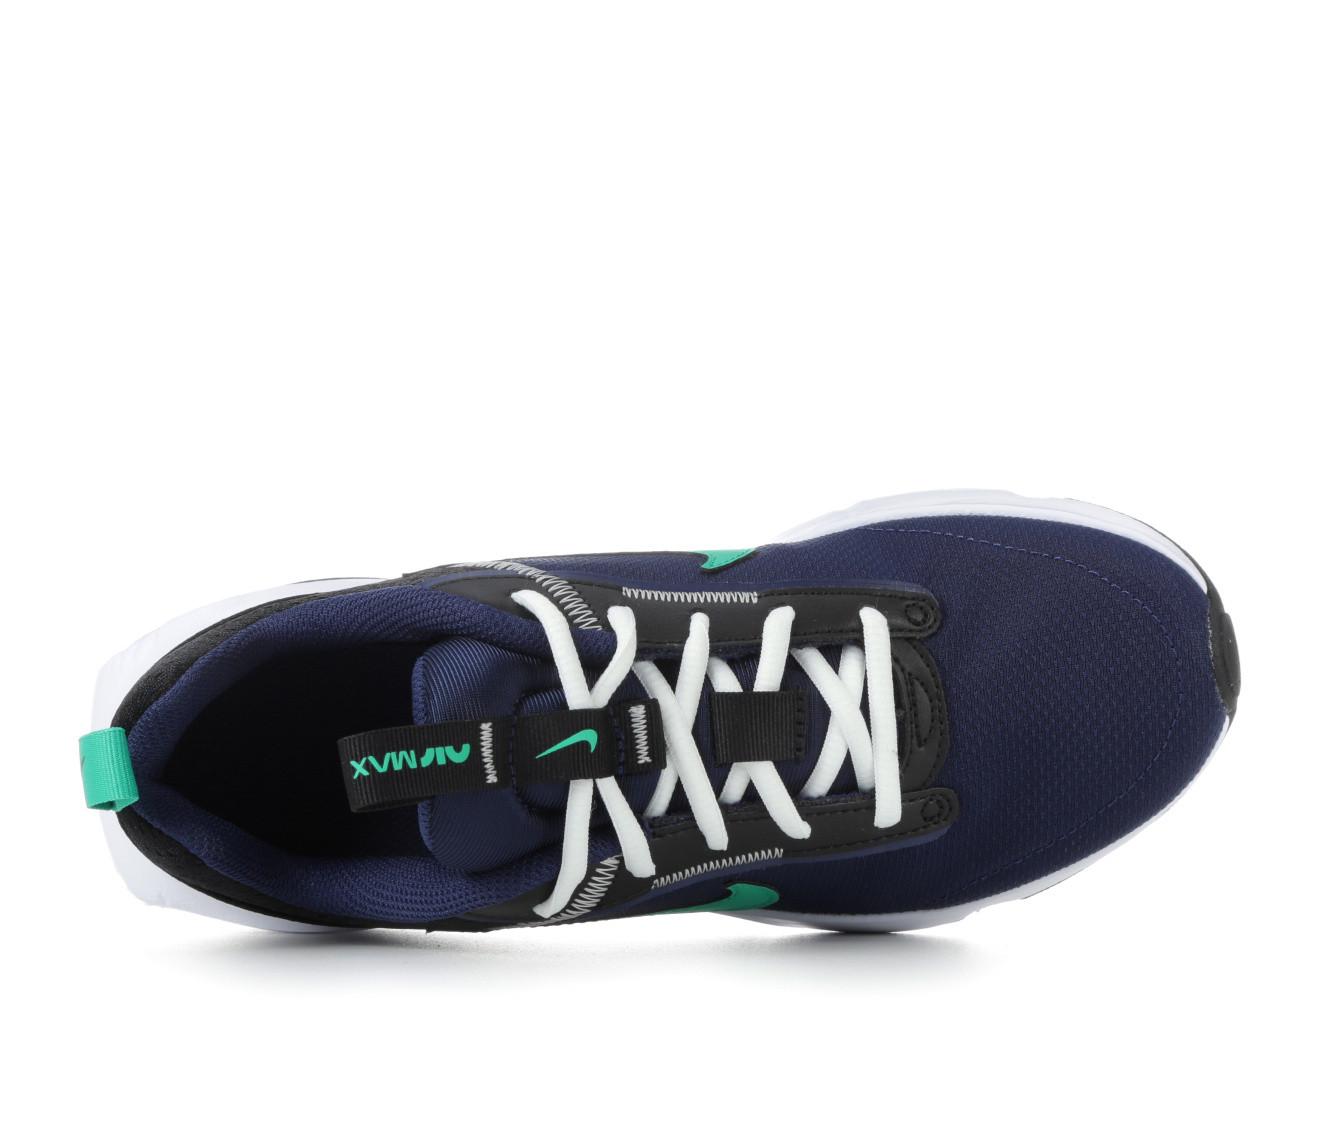 Boys' Nike Big Kid Air Max Intrlk Lite Running Shoes